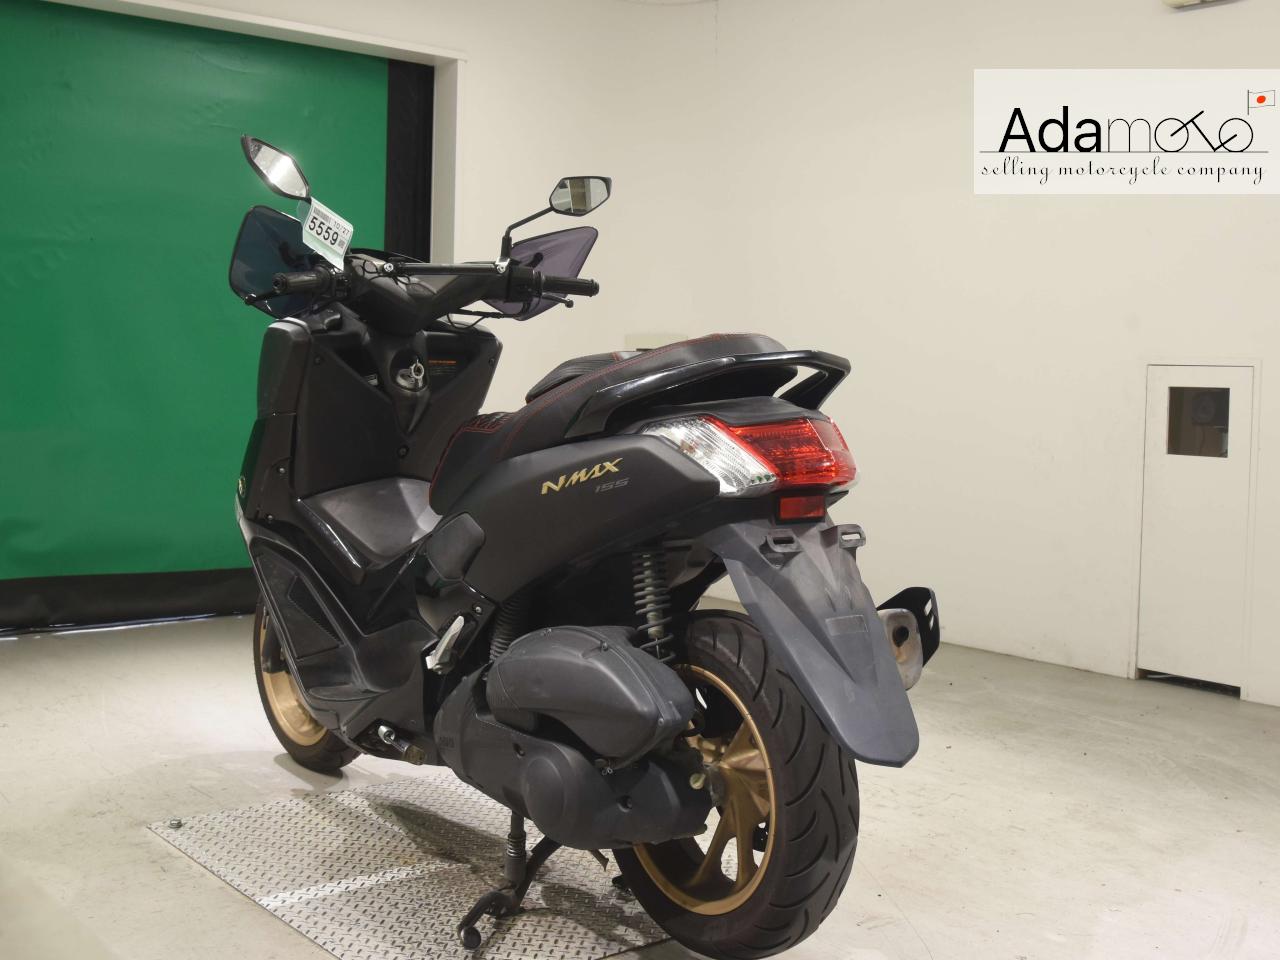 Yamaha NMAX155A - Adamoto - Motorcycles from Japan